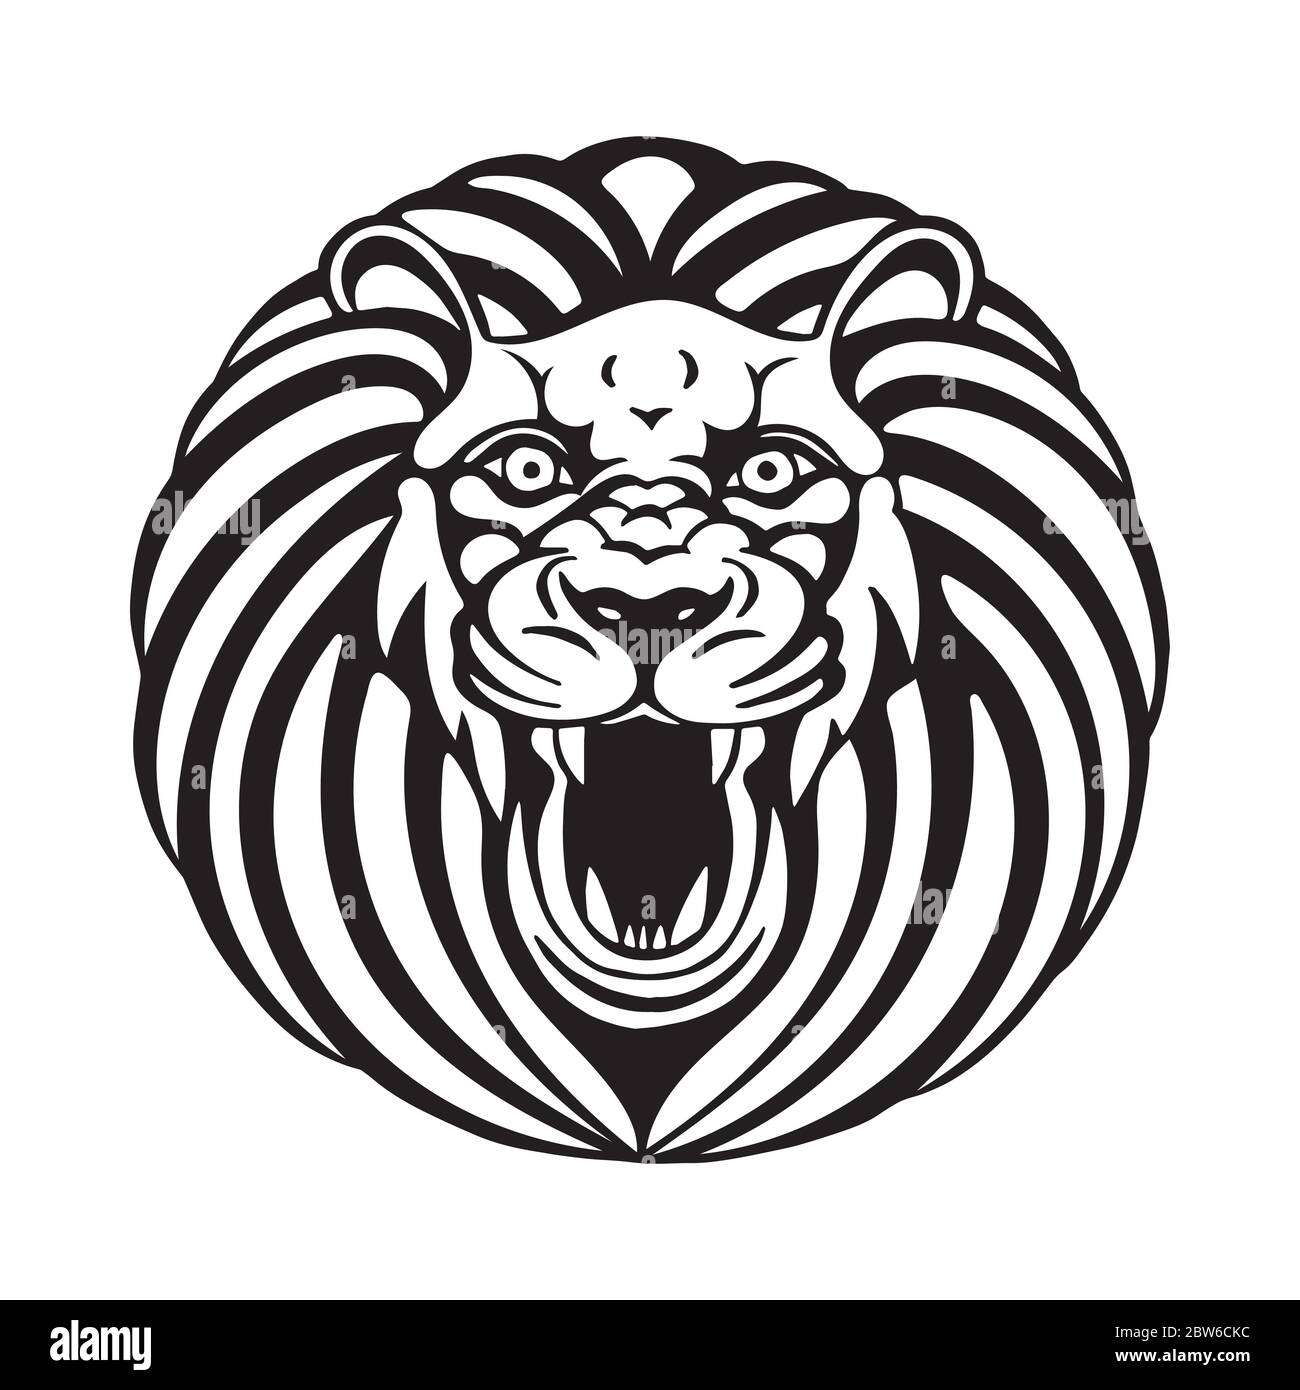 Lion. Hand drawing roaring lion vector illustration. Roaring lion head logo. Part of set. Stock Vector